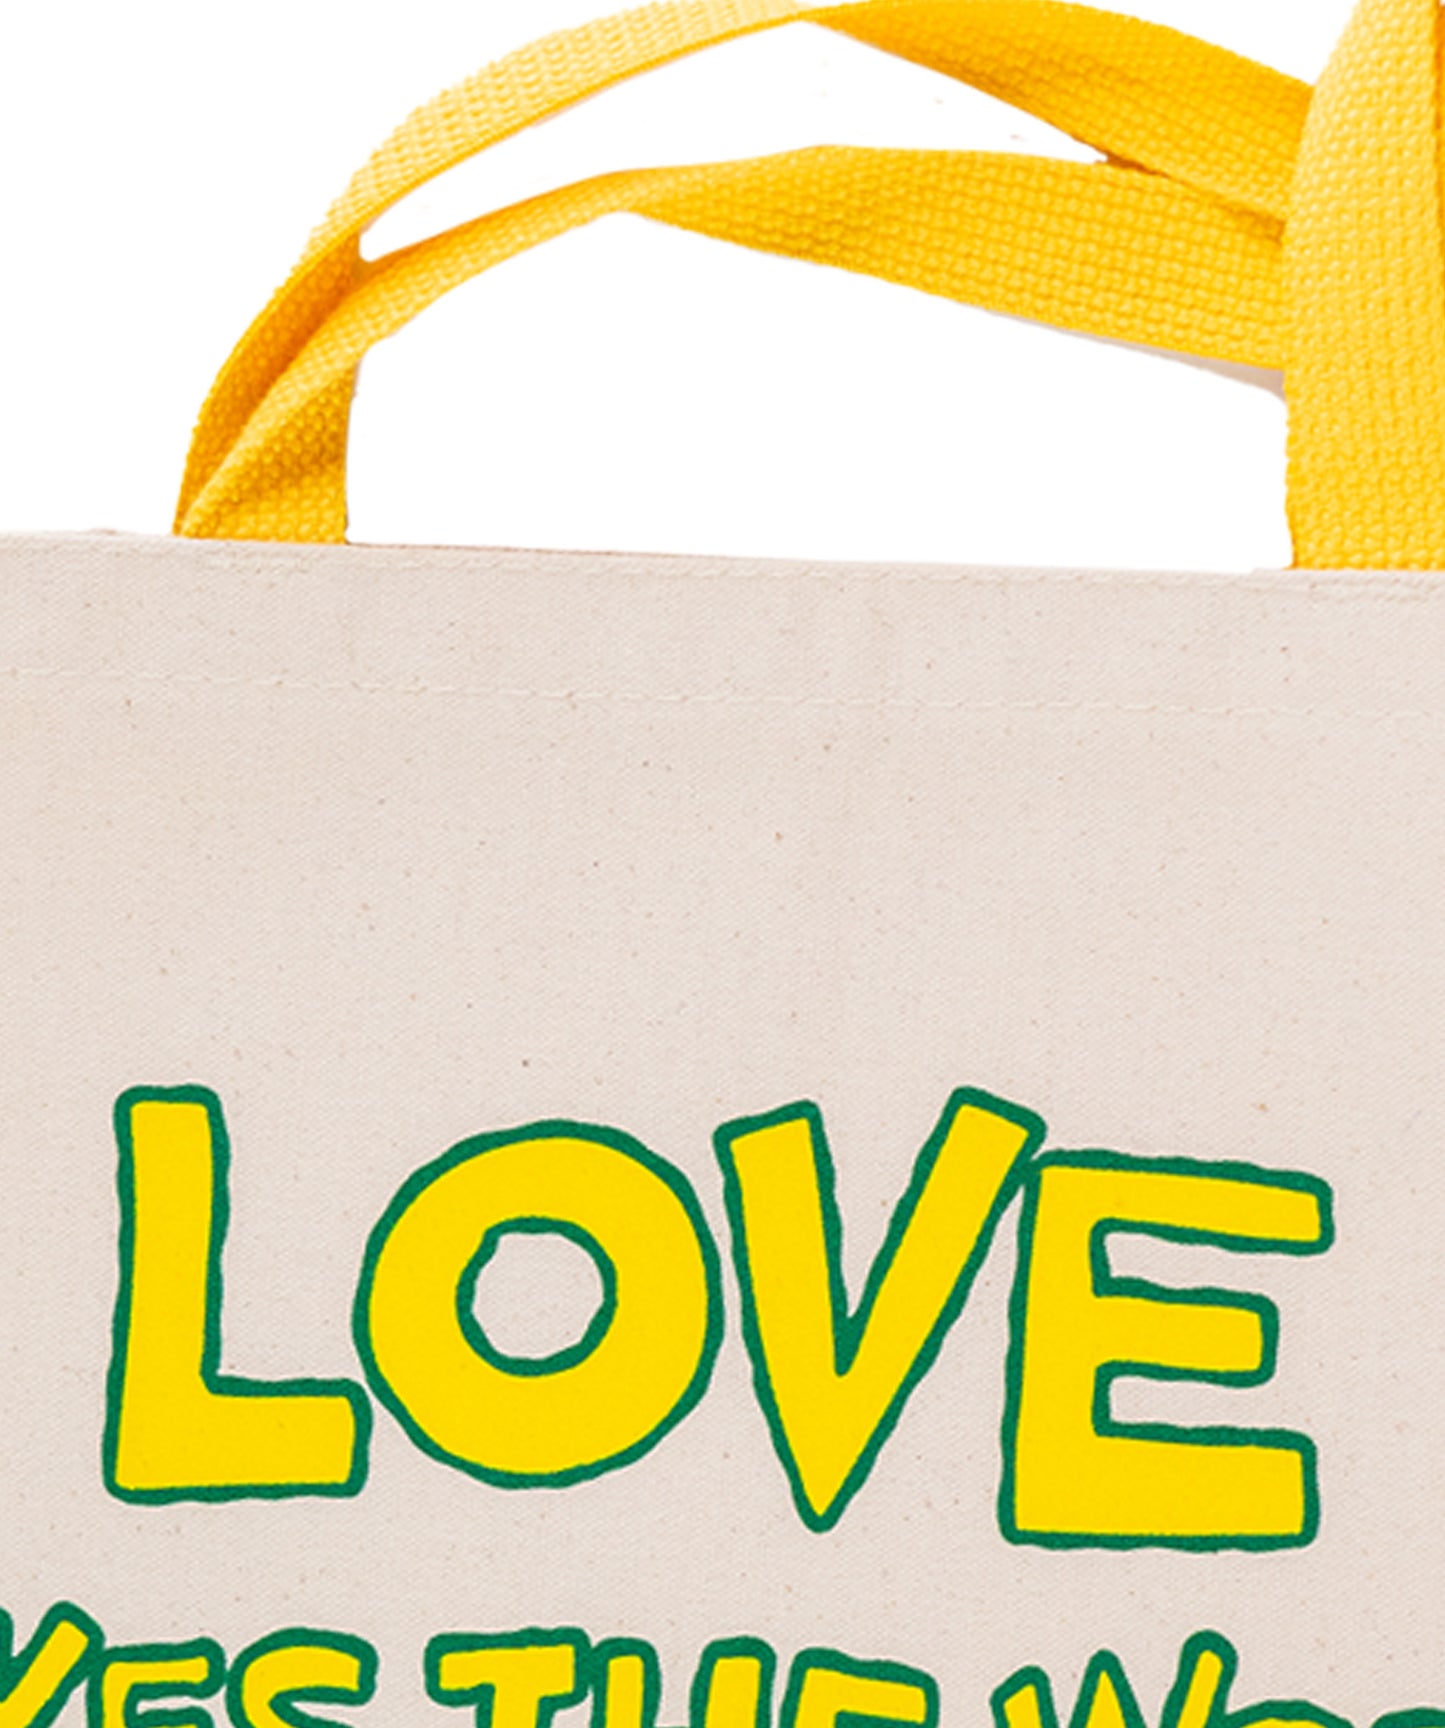 Love Makes The World Go Around Tote Bag • Sesame Street x Oxford Pennant